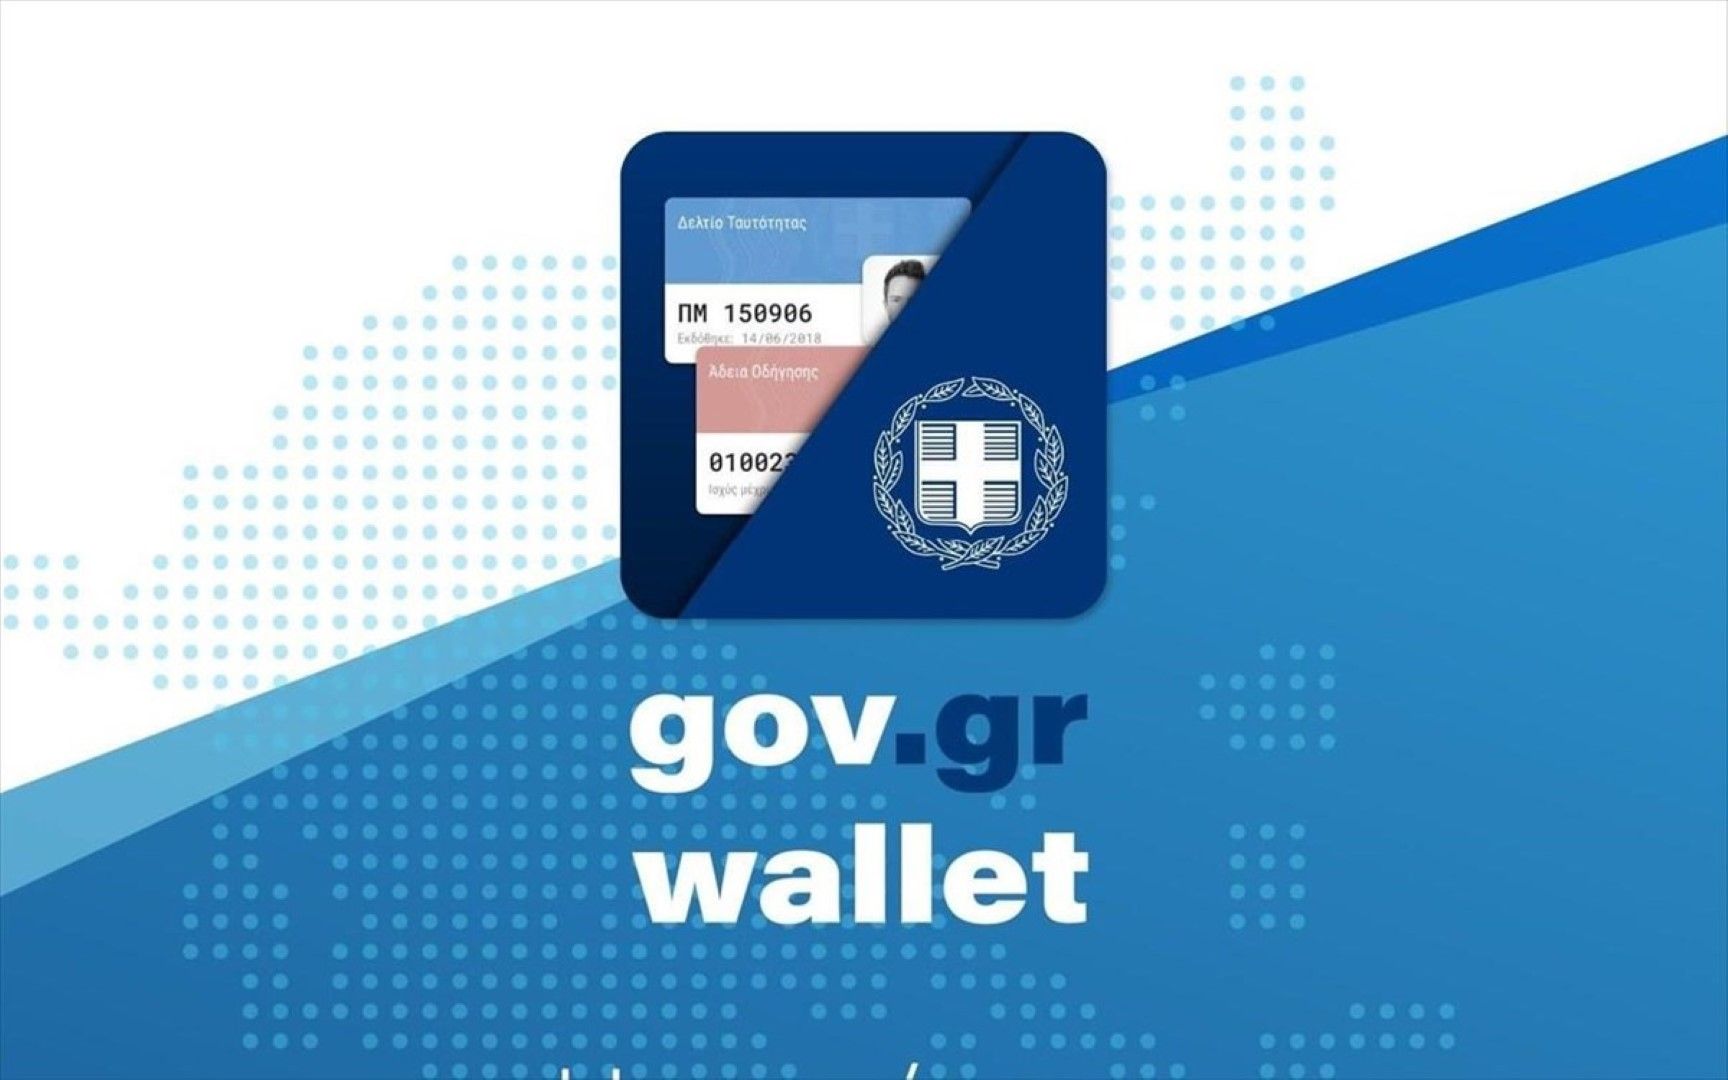 Gov.gr Wallet: Όσα πρέπει να γνωρίζετε για τη νέα εφαρμογή